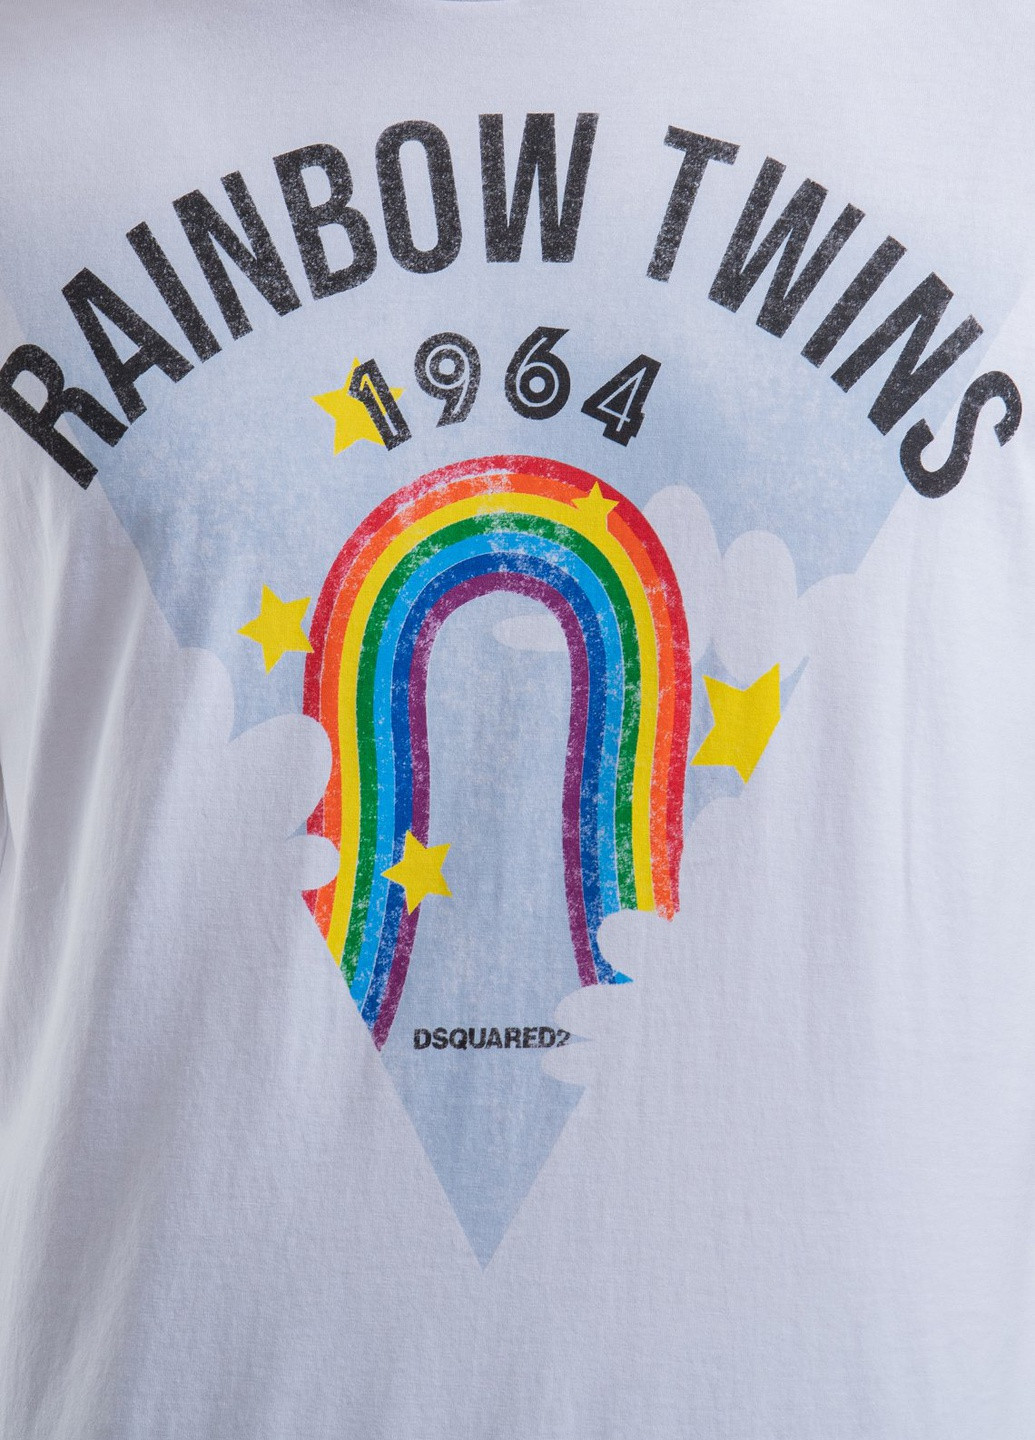 Белая белая футболка rainbow twins Dsquared2